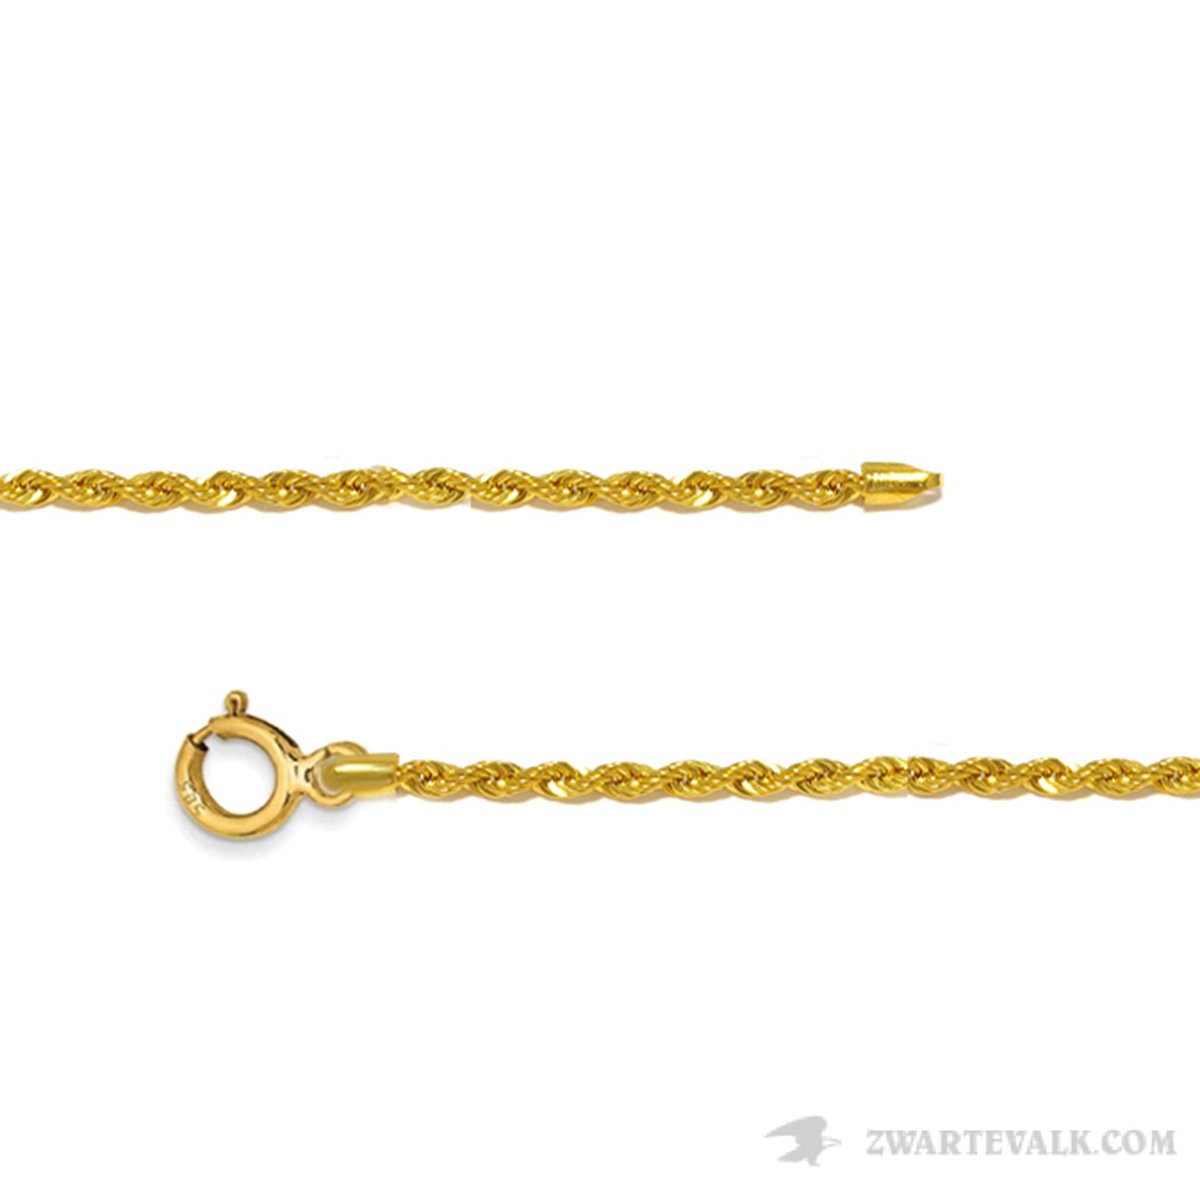 Juwelier Zwartevalk 14 karaat gouden rope chain / koord ketting - 1.8mm/50cm